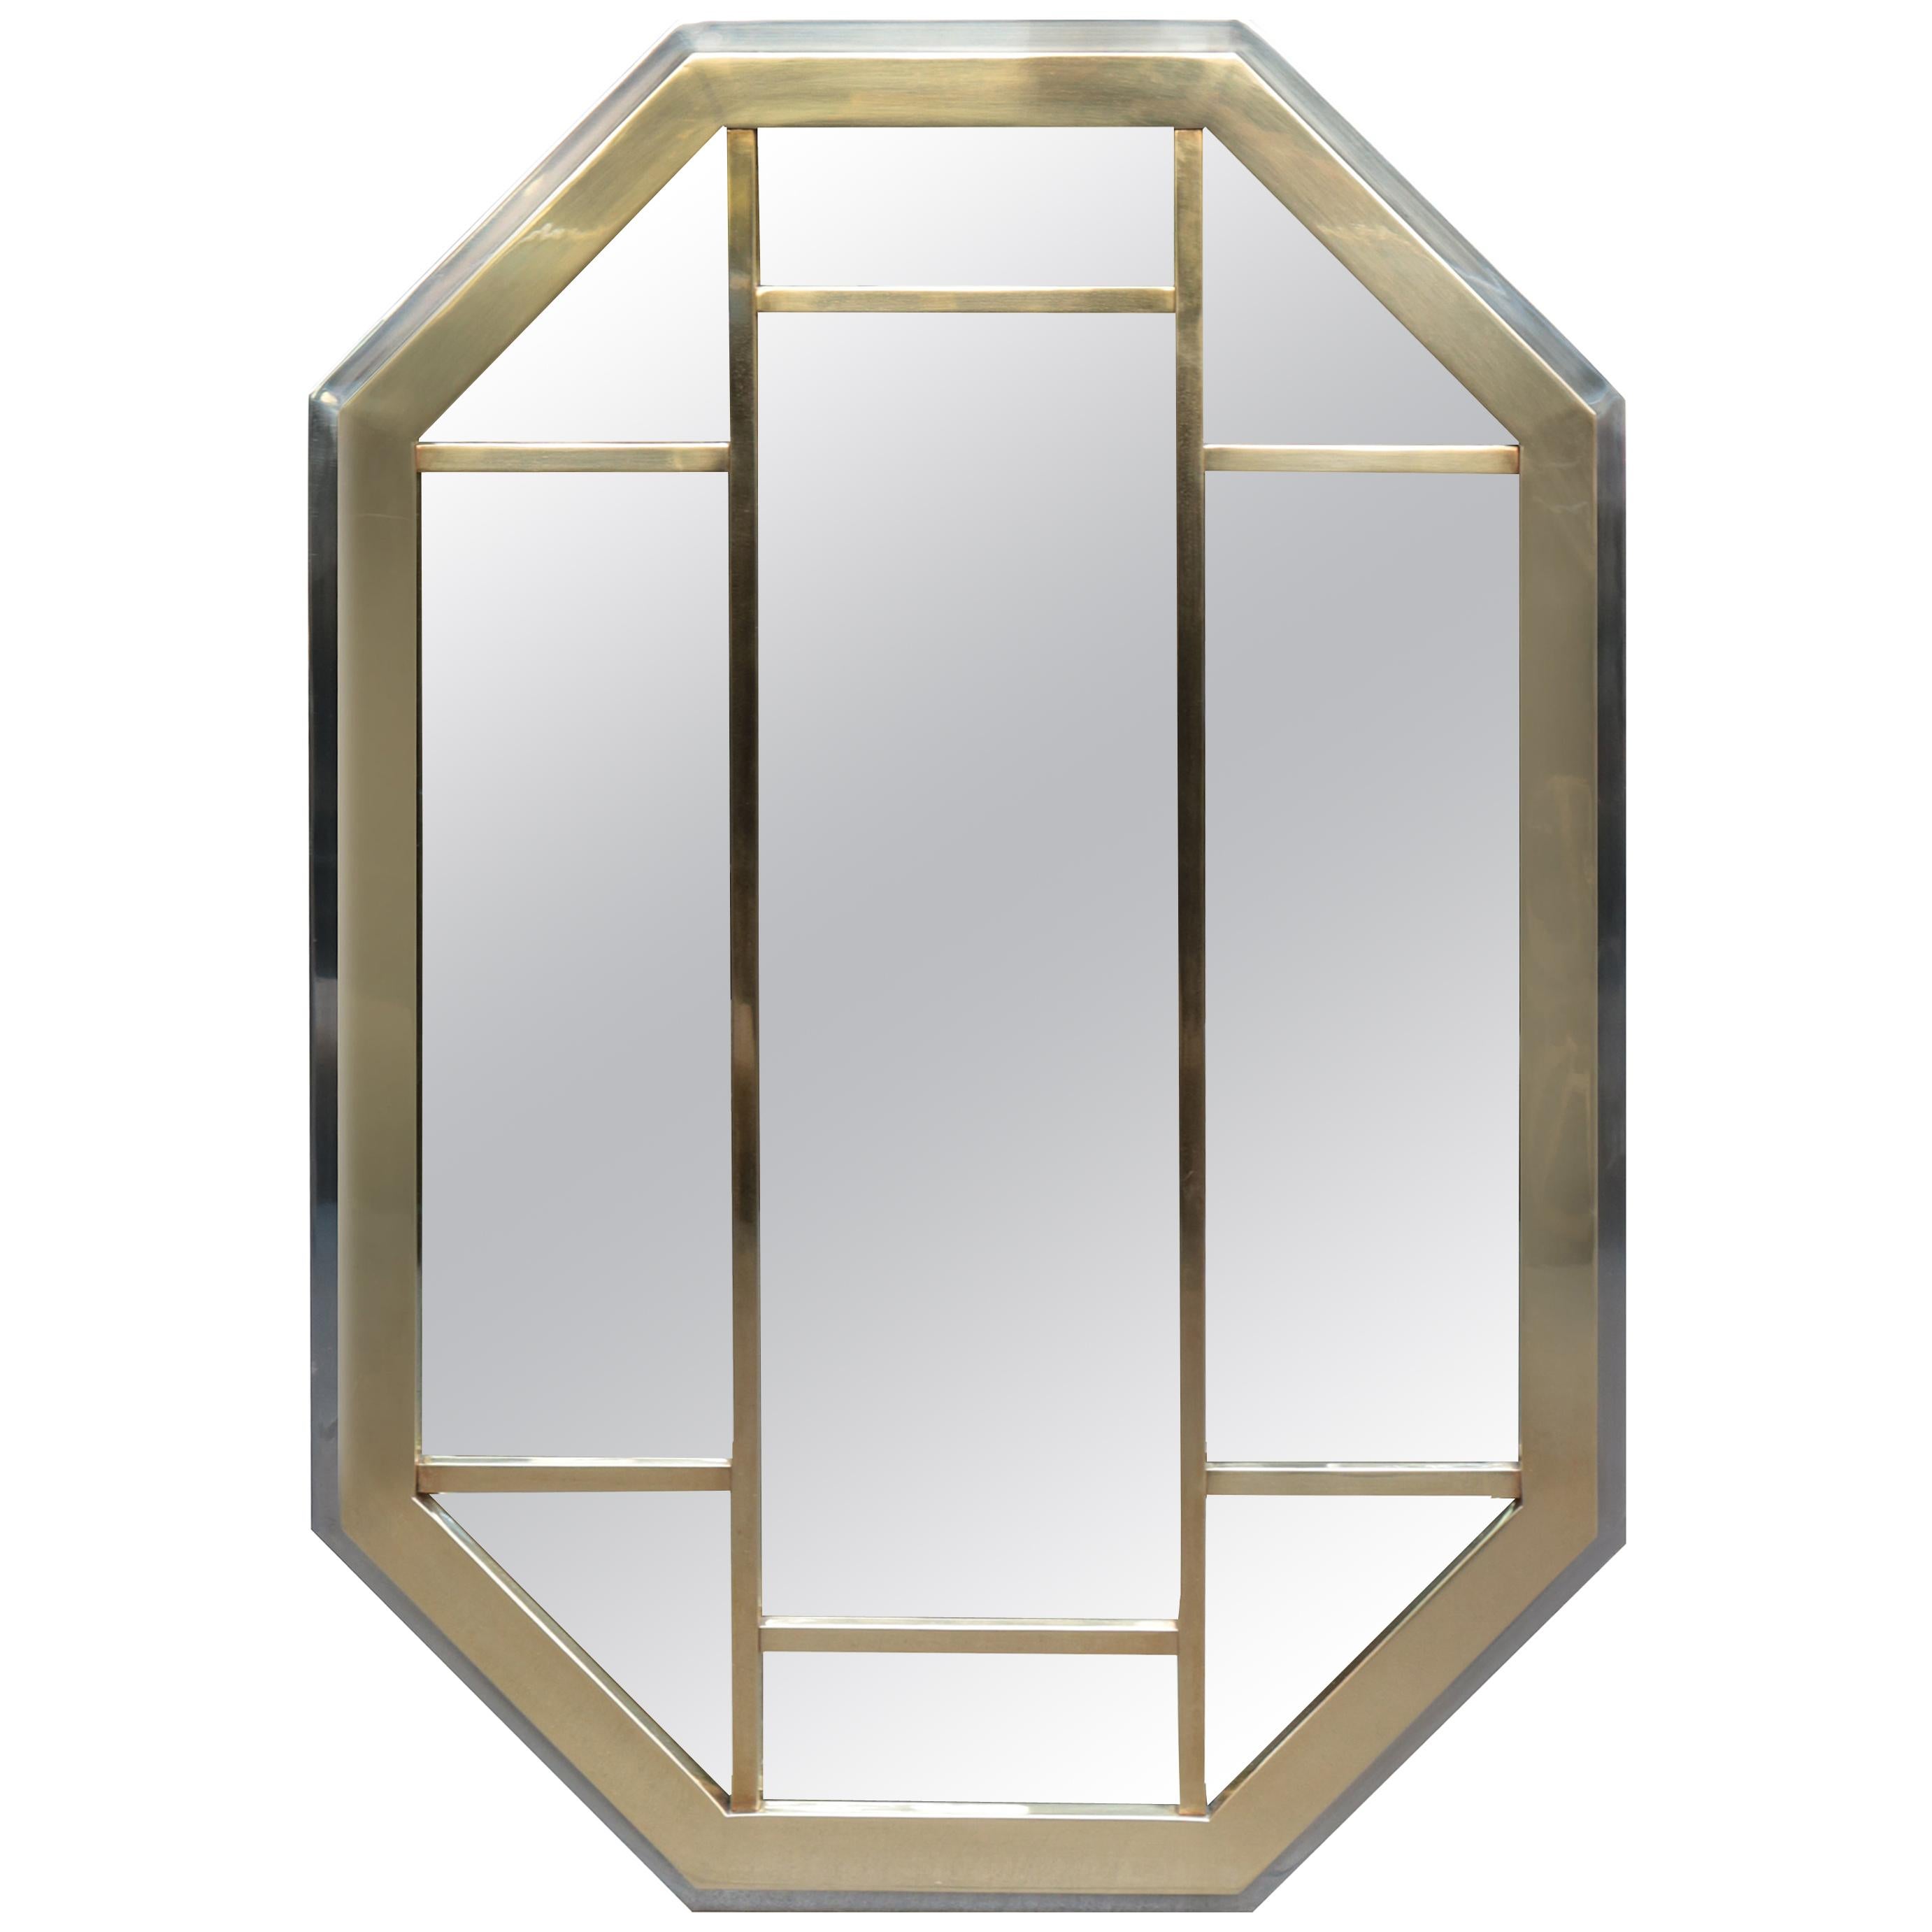 Two-Tone Segmented Modernist Mirror